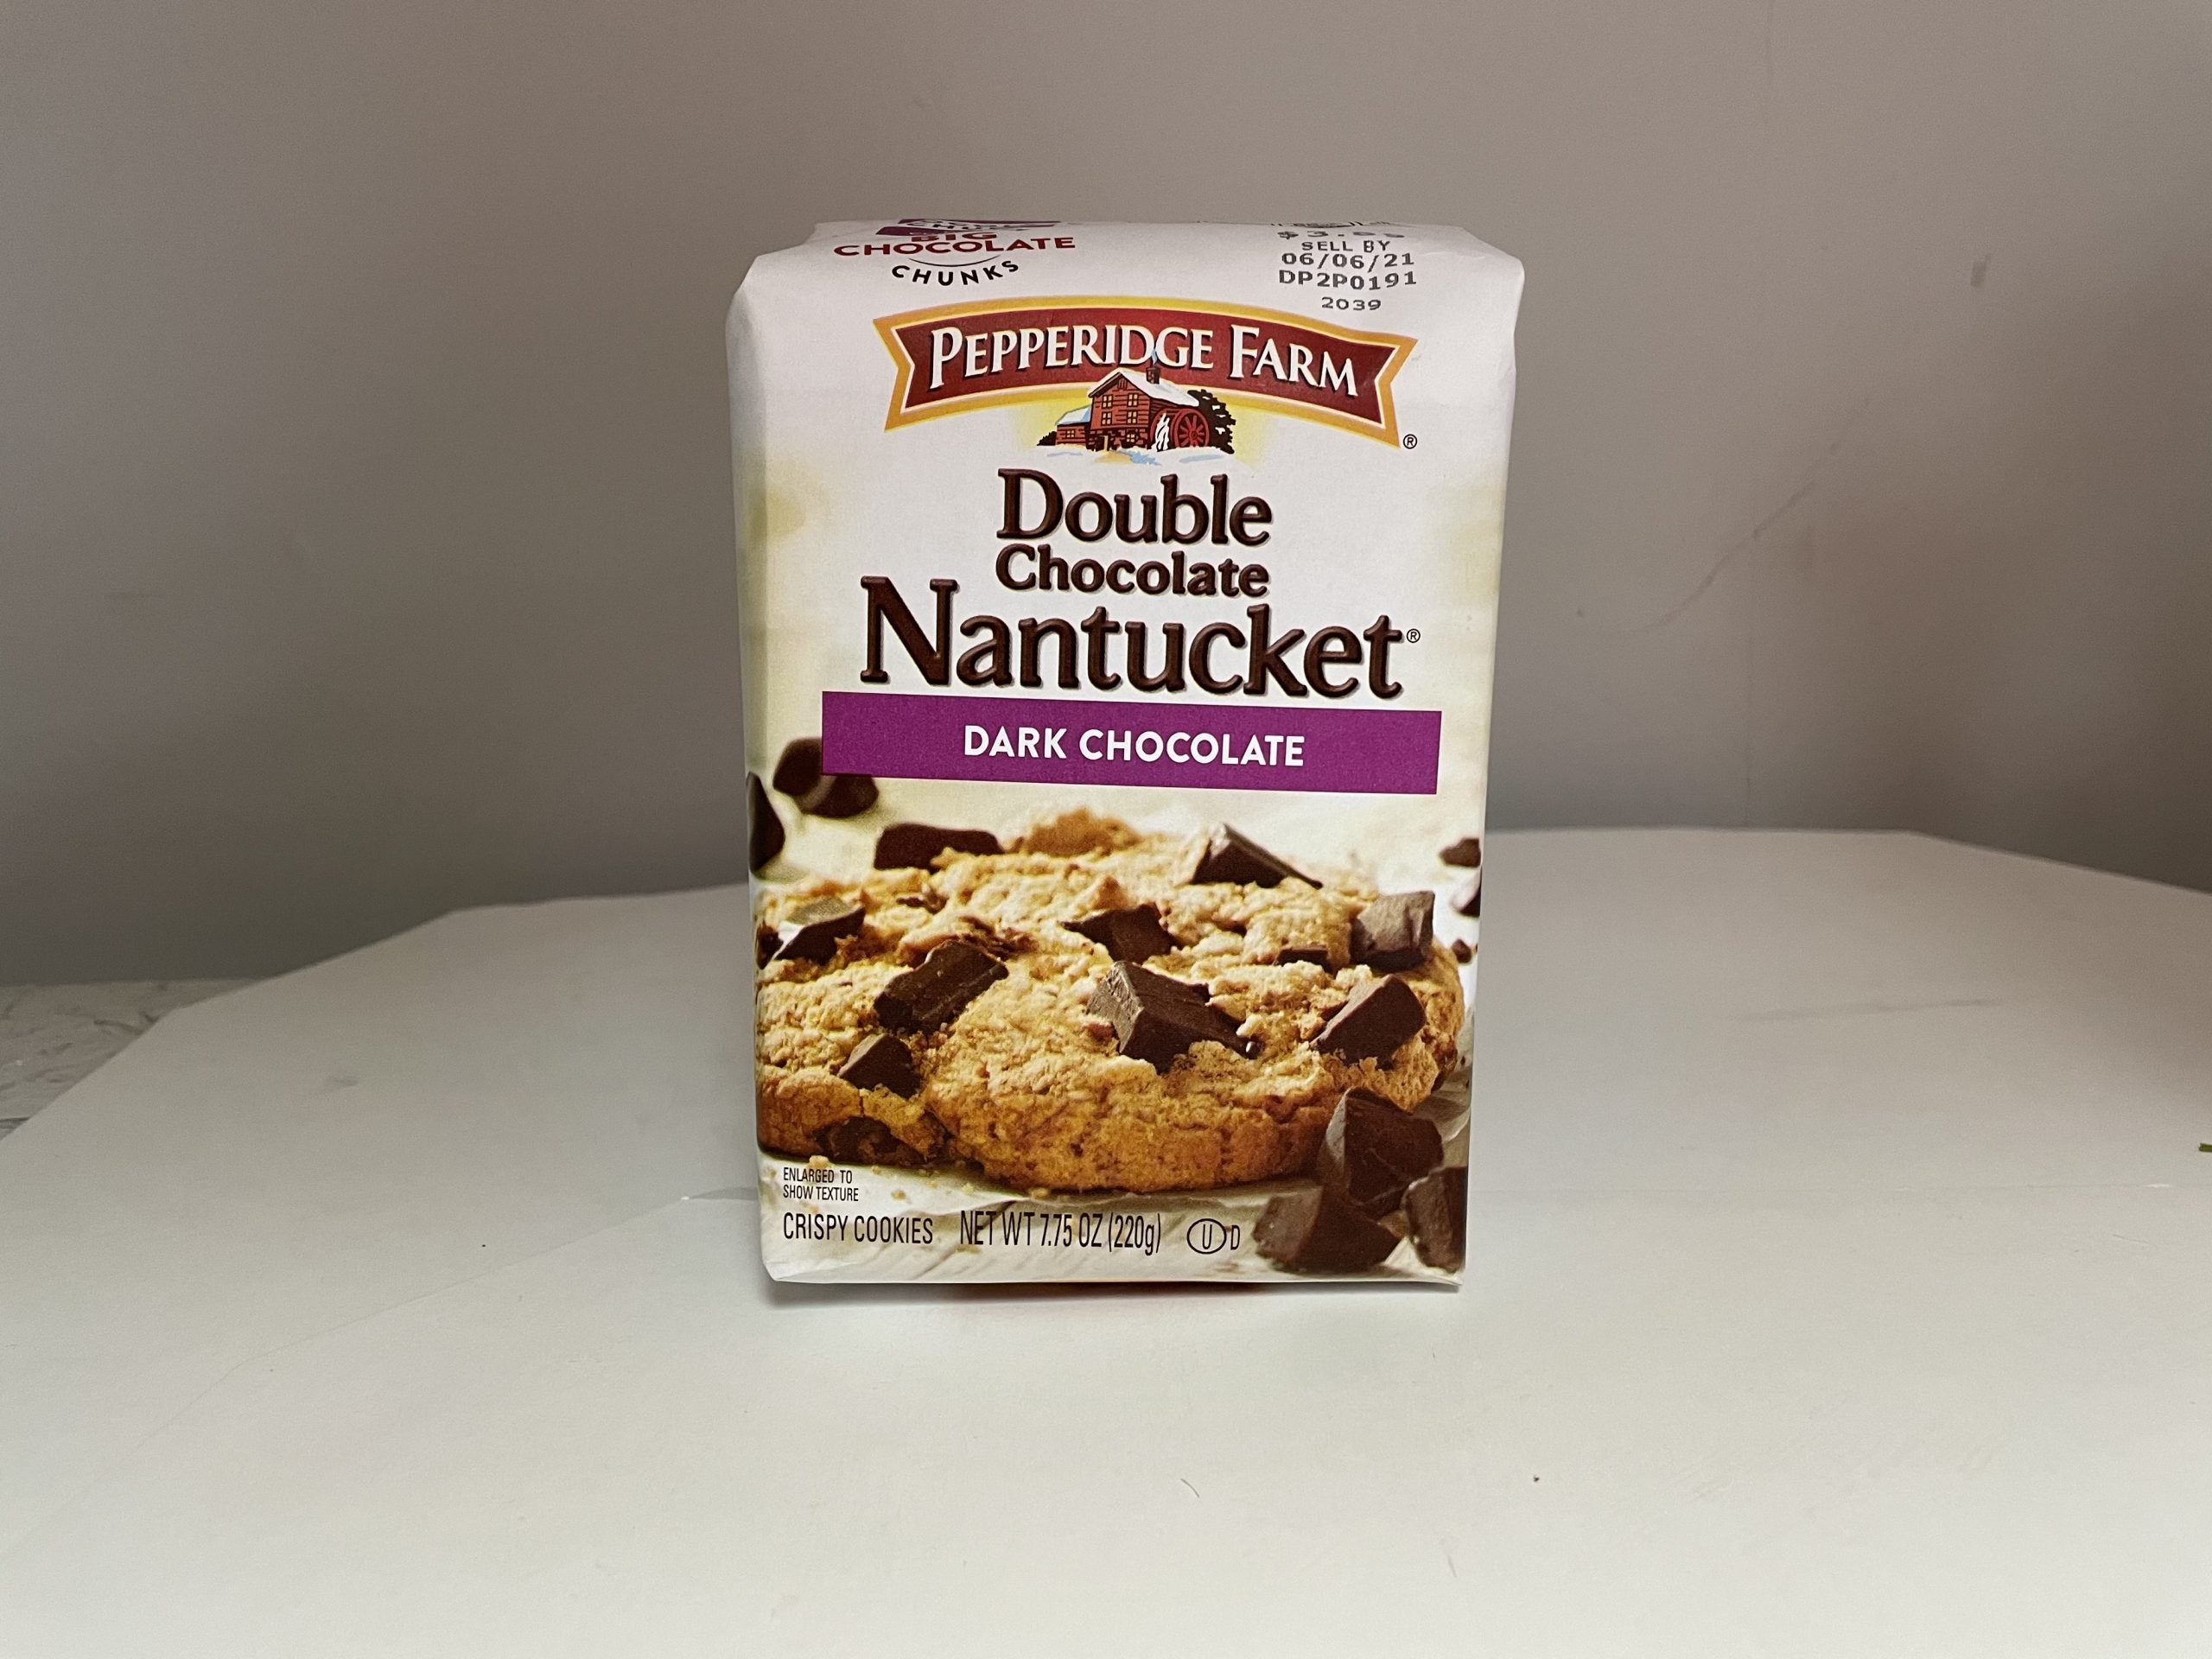 Pepperidge Farm Nantucket Chocolate Chip Cookies